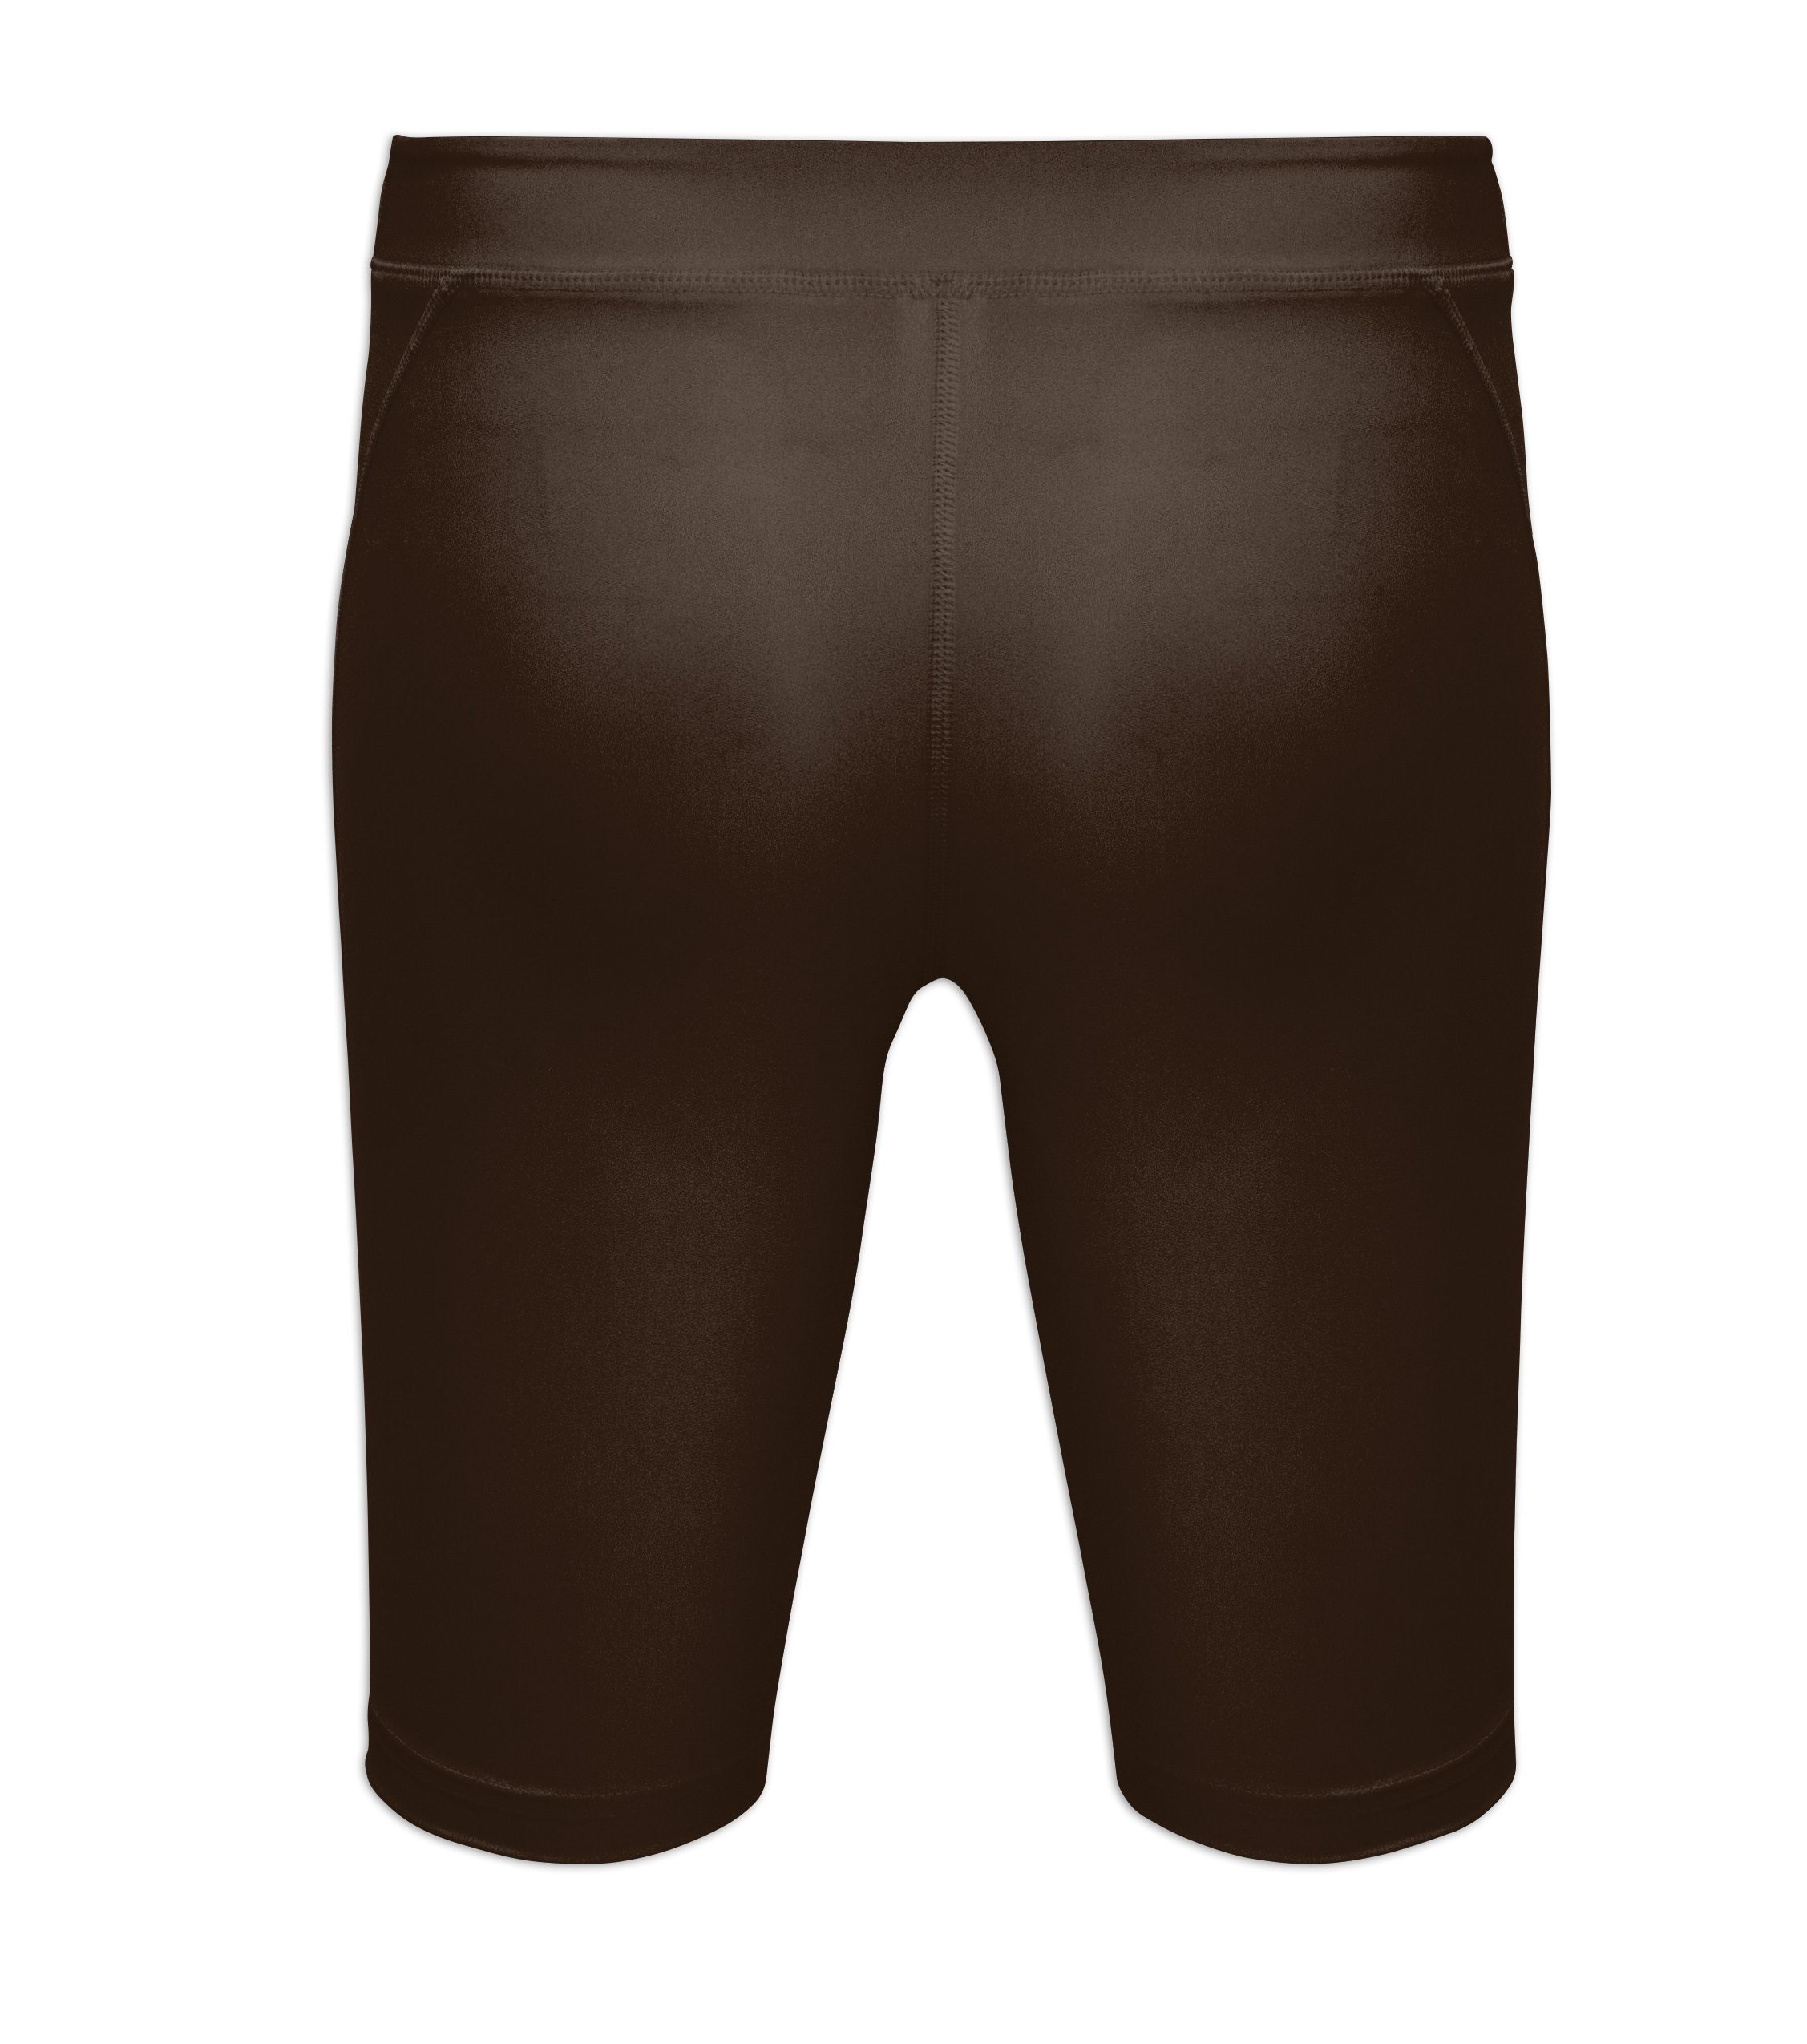 Ladies Compression Shorts - Brown